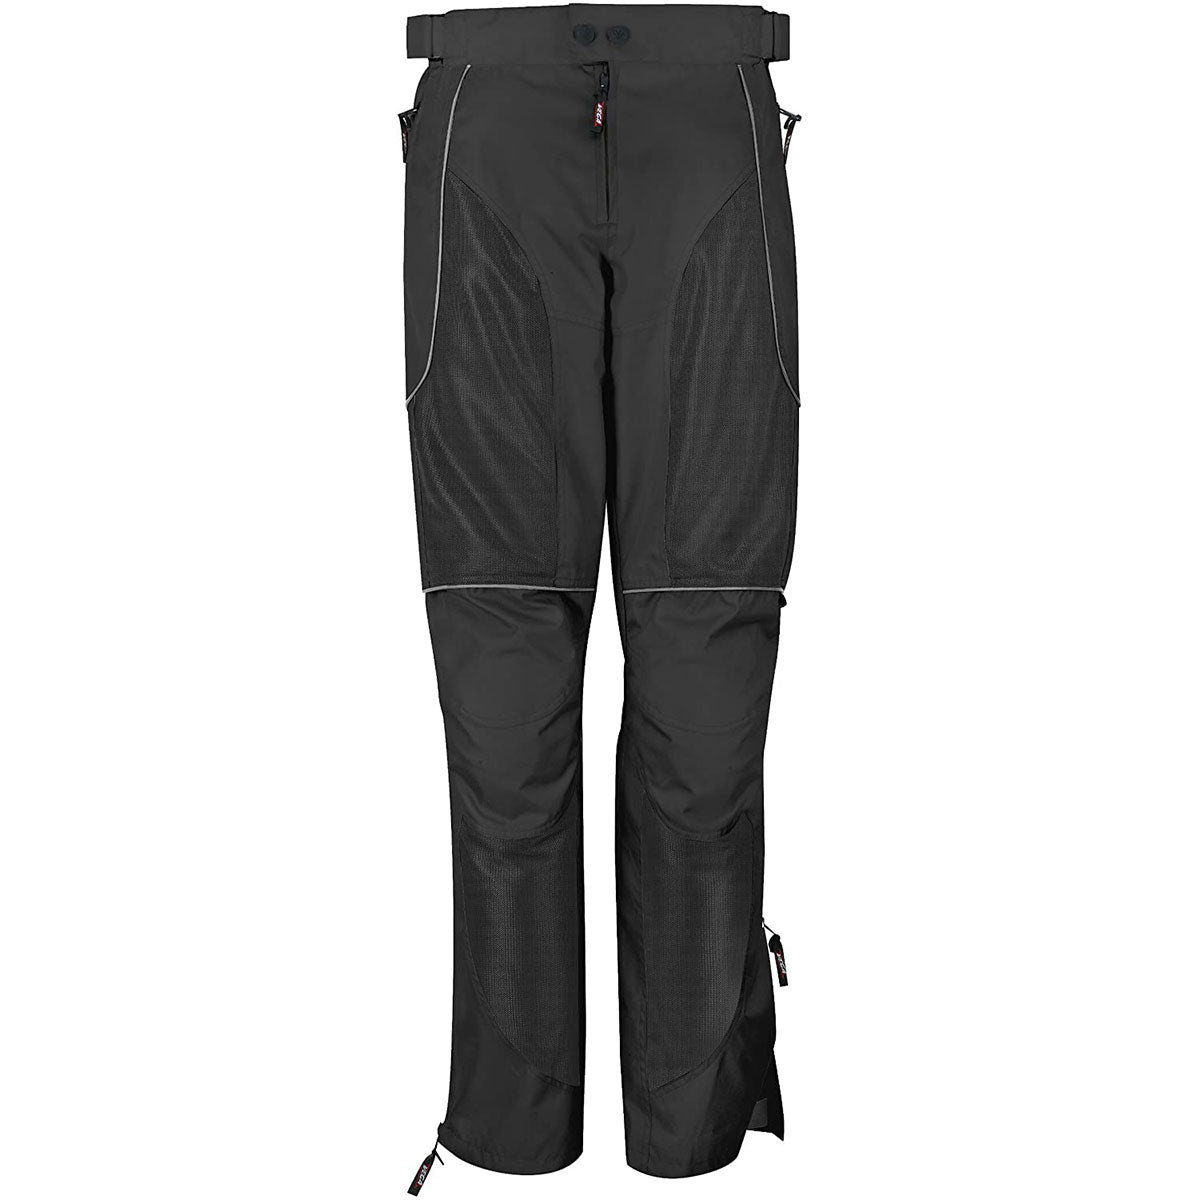 Vega Technical Gear Mercury Mesh Men's Street Pants - Black / X-Large